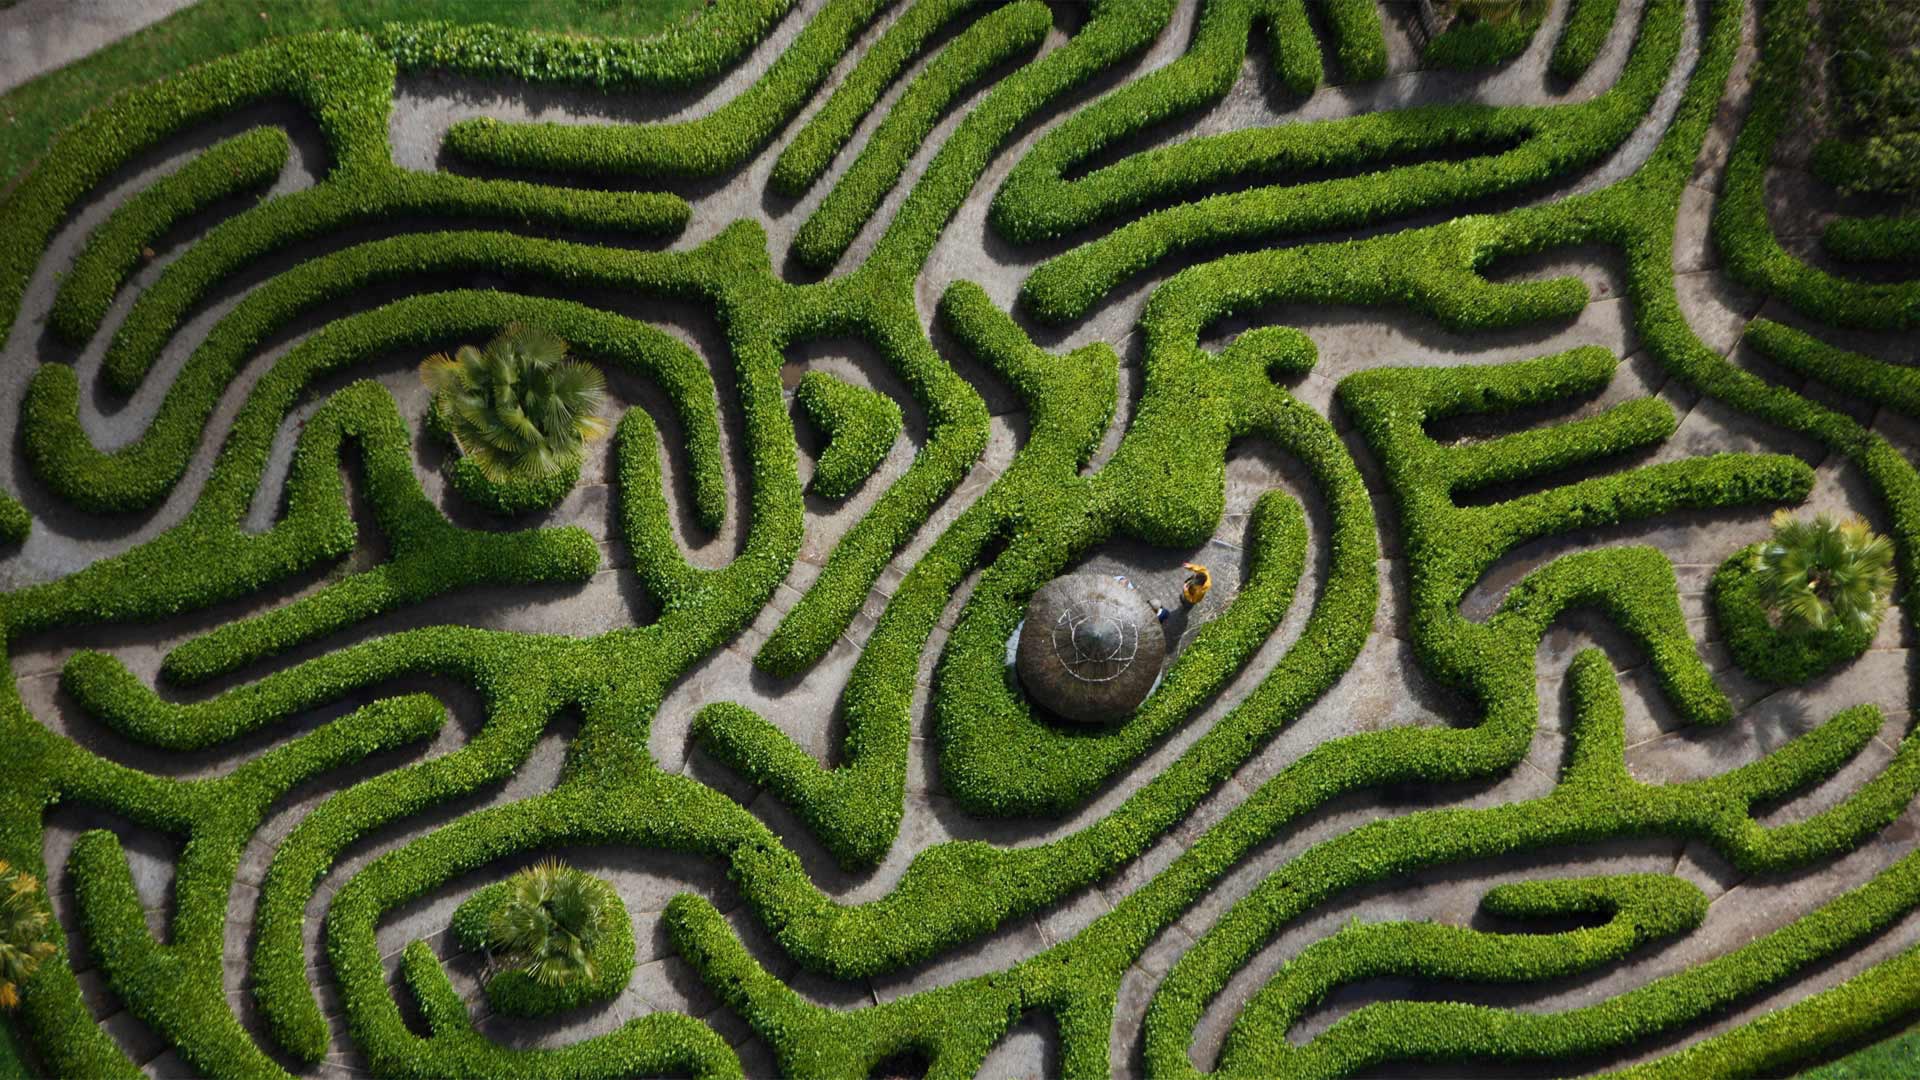 man made, garden, england, labyrinth